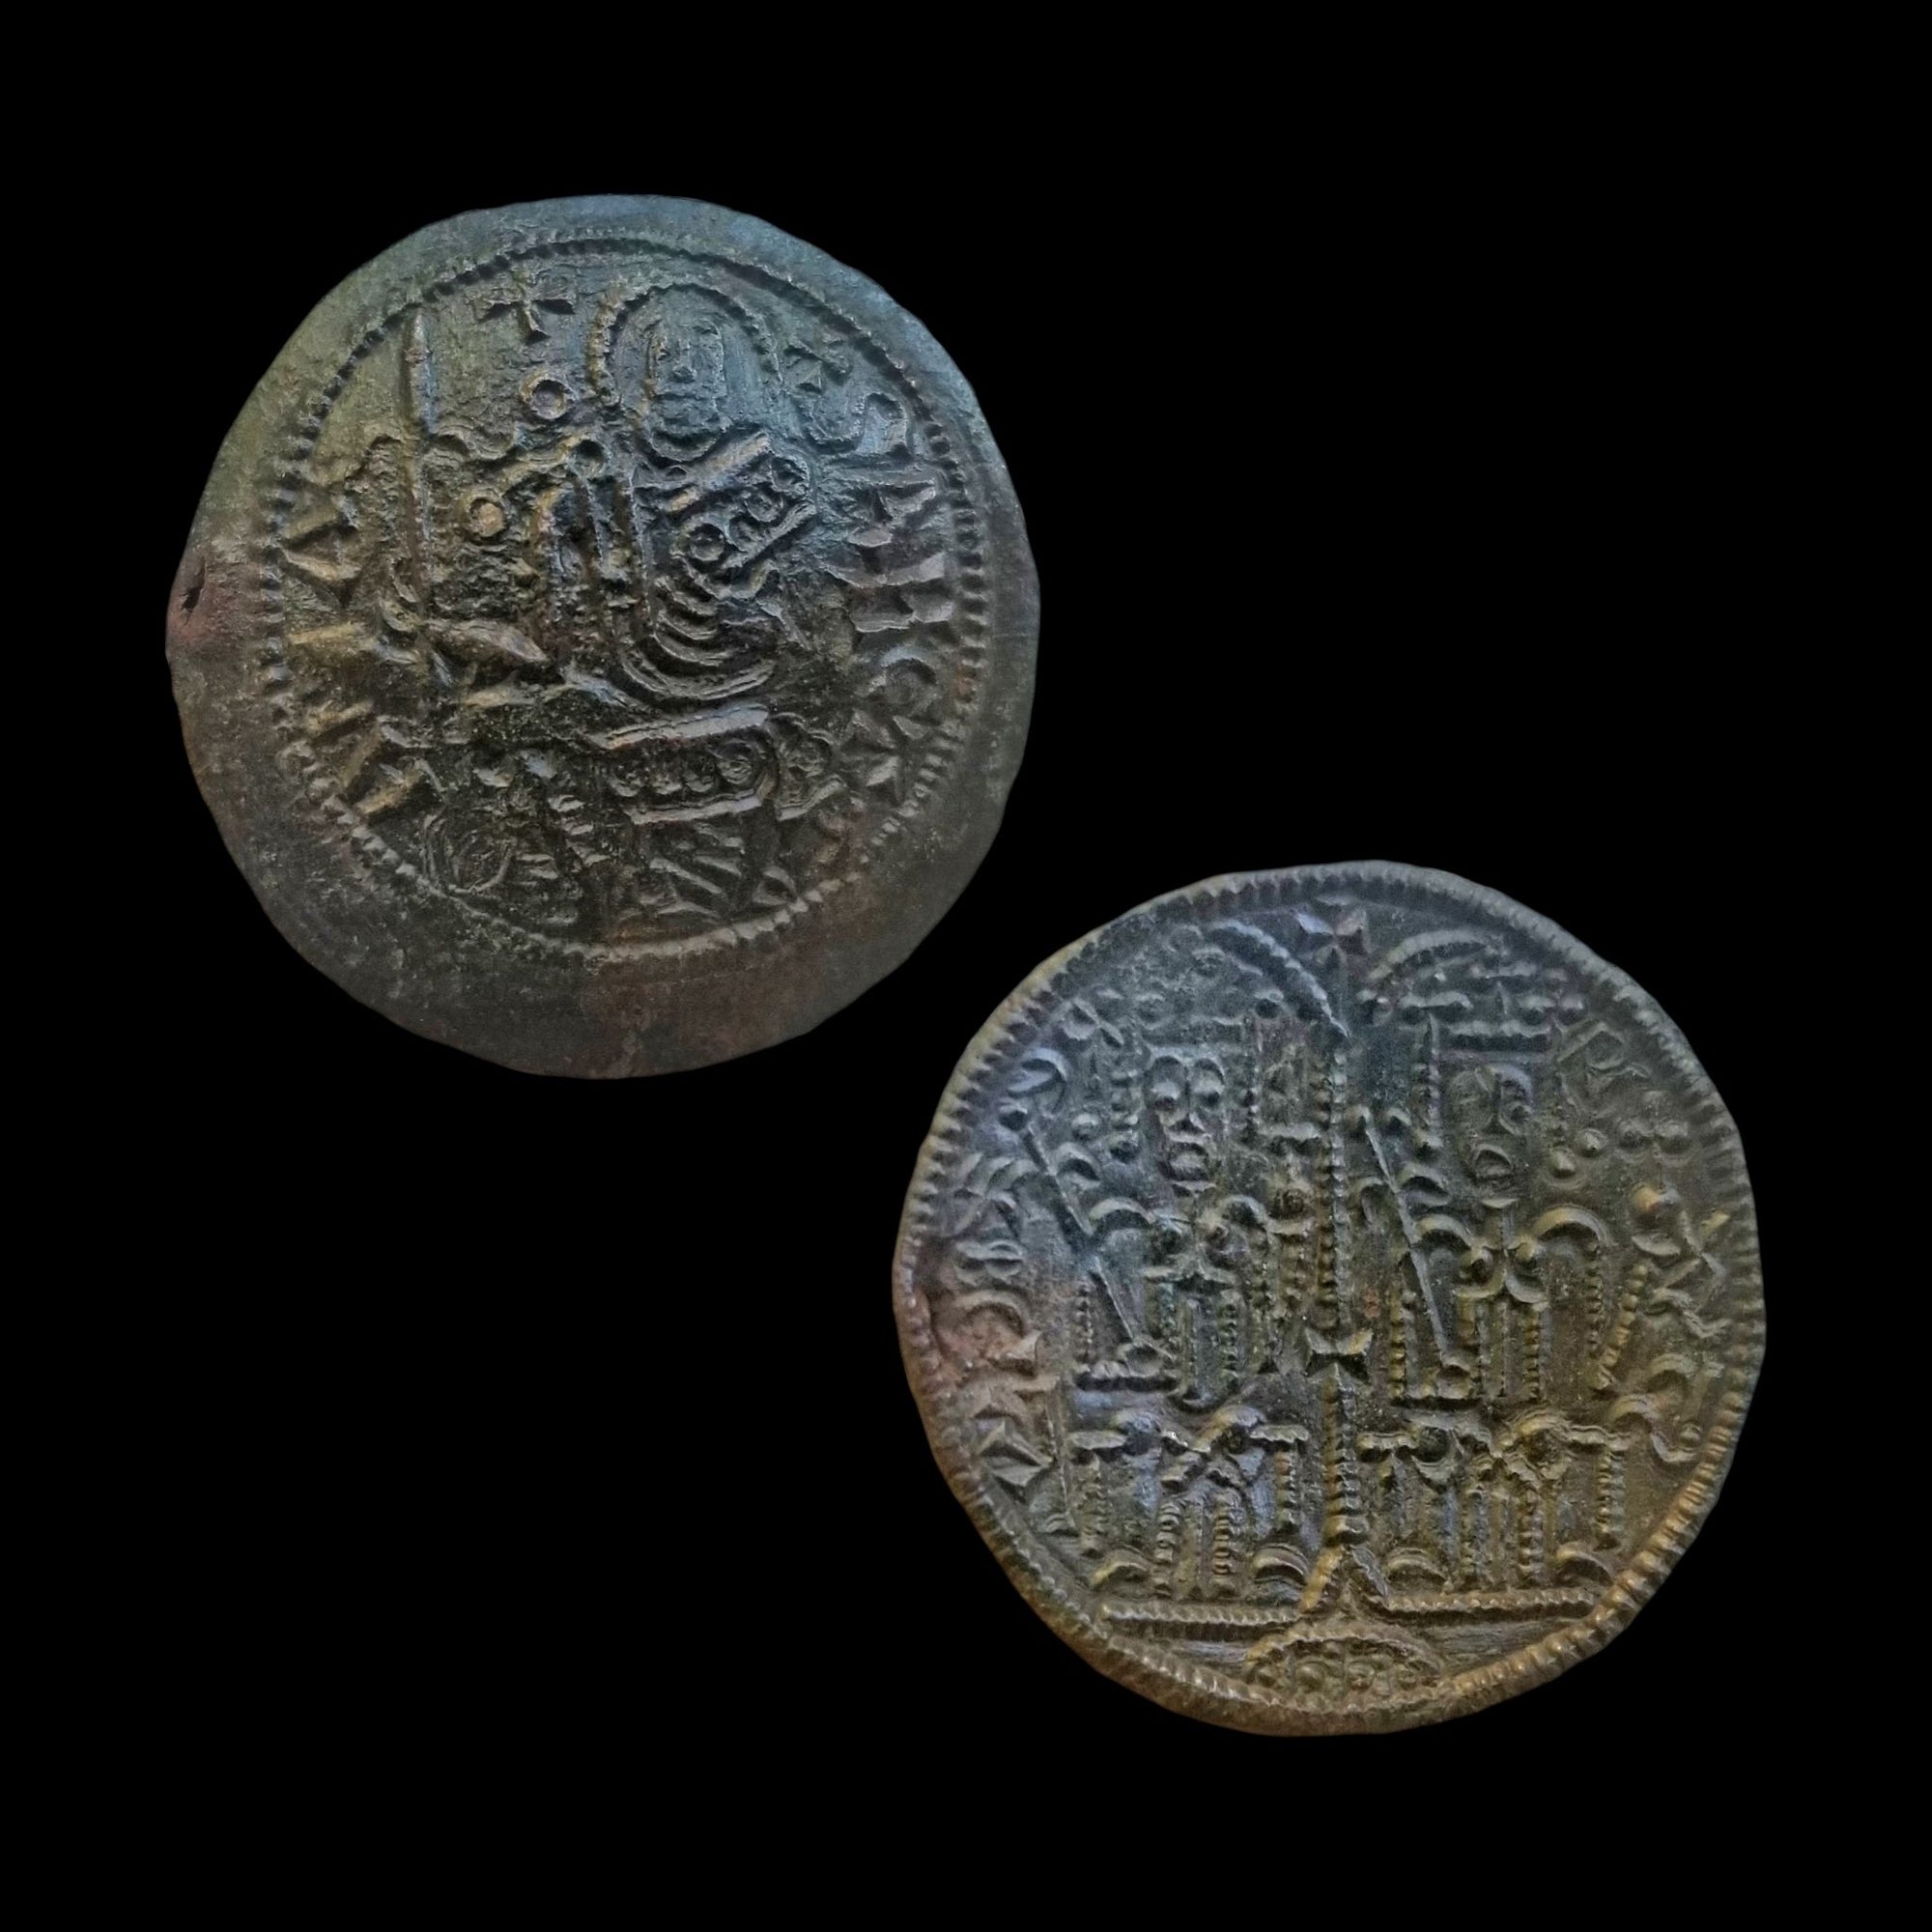 Hungary, Bela III Follis - 1172 AD - Kingdom of Hungary